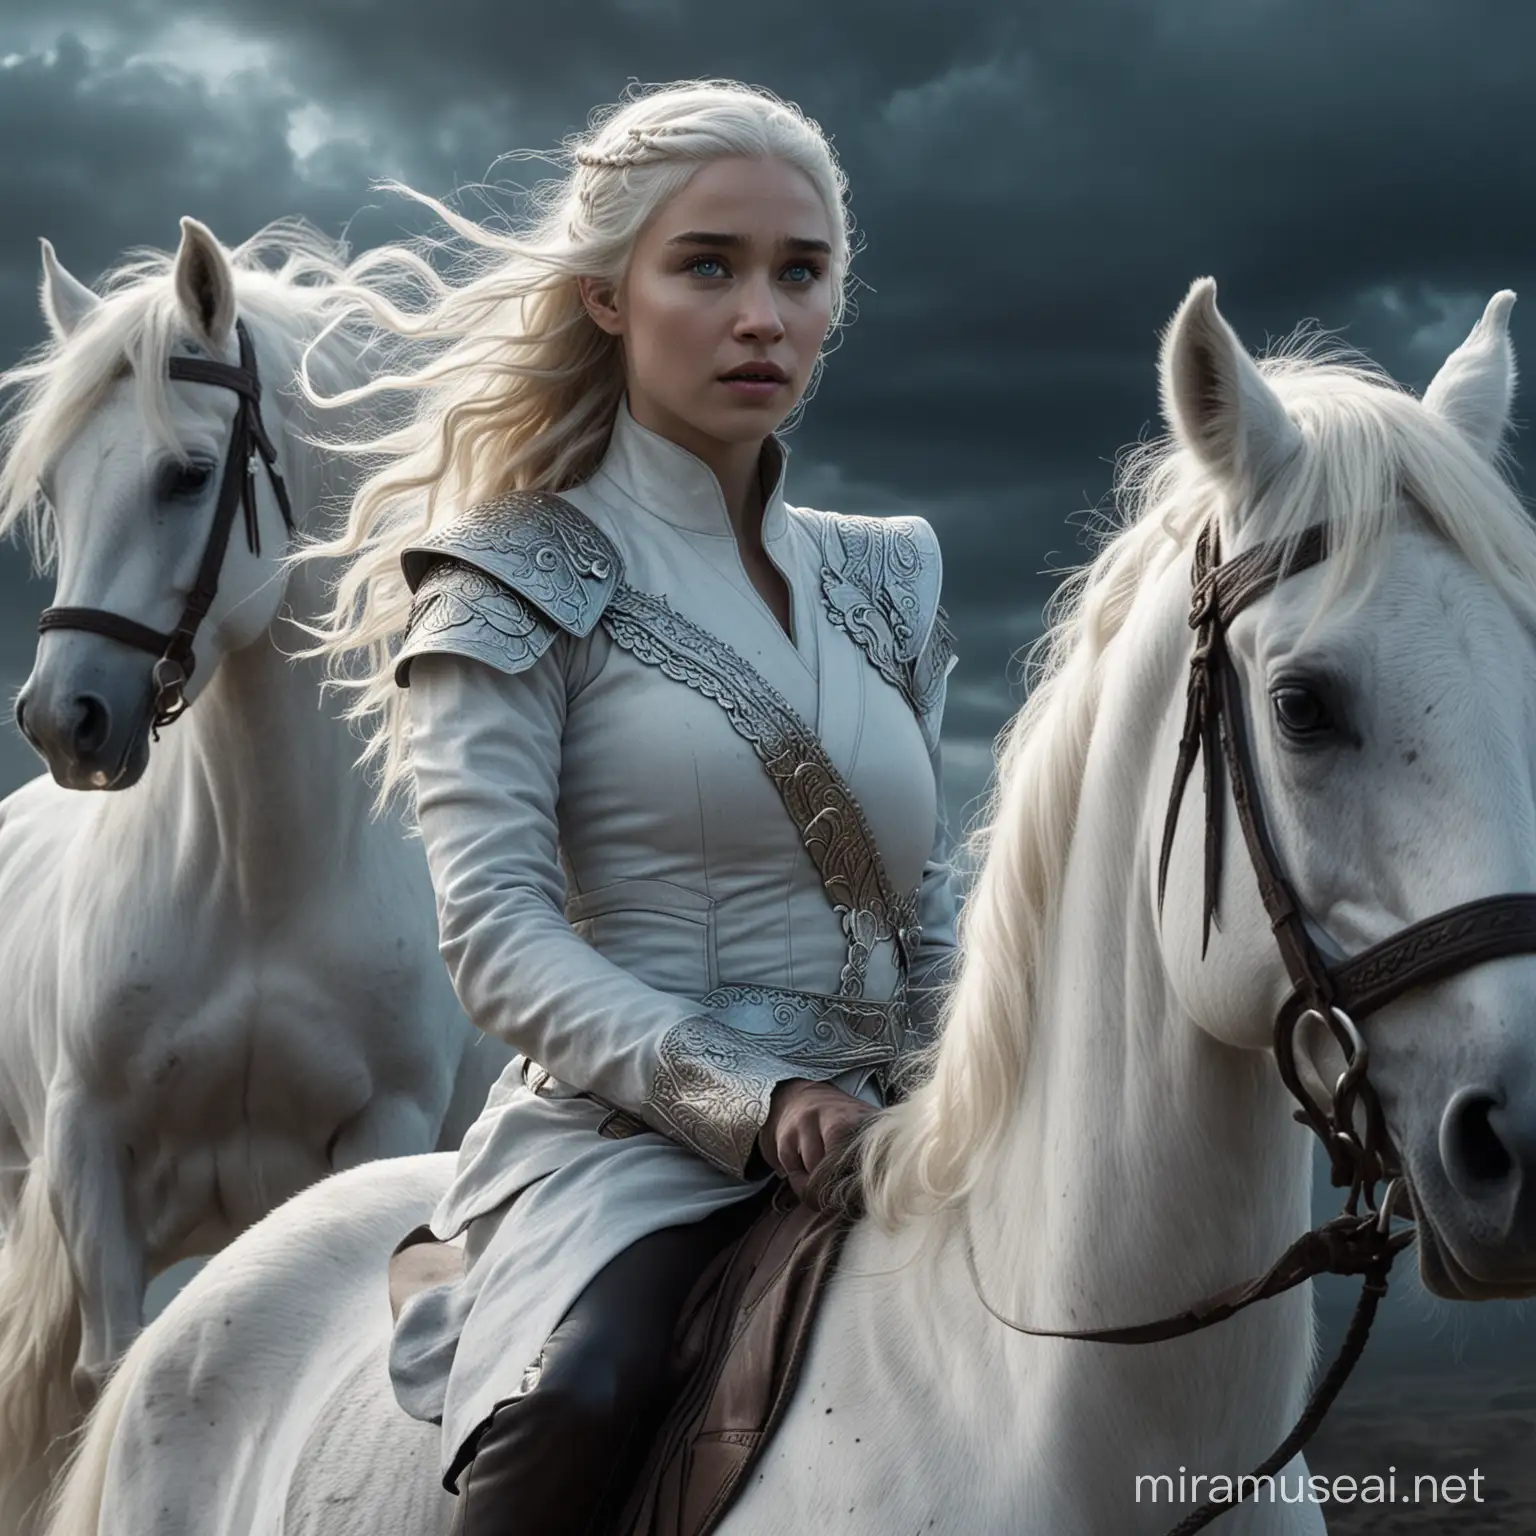 Daenerys Targaryen Riding White Icelandic Horse with Dragons in Dark Sky